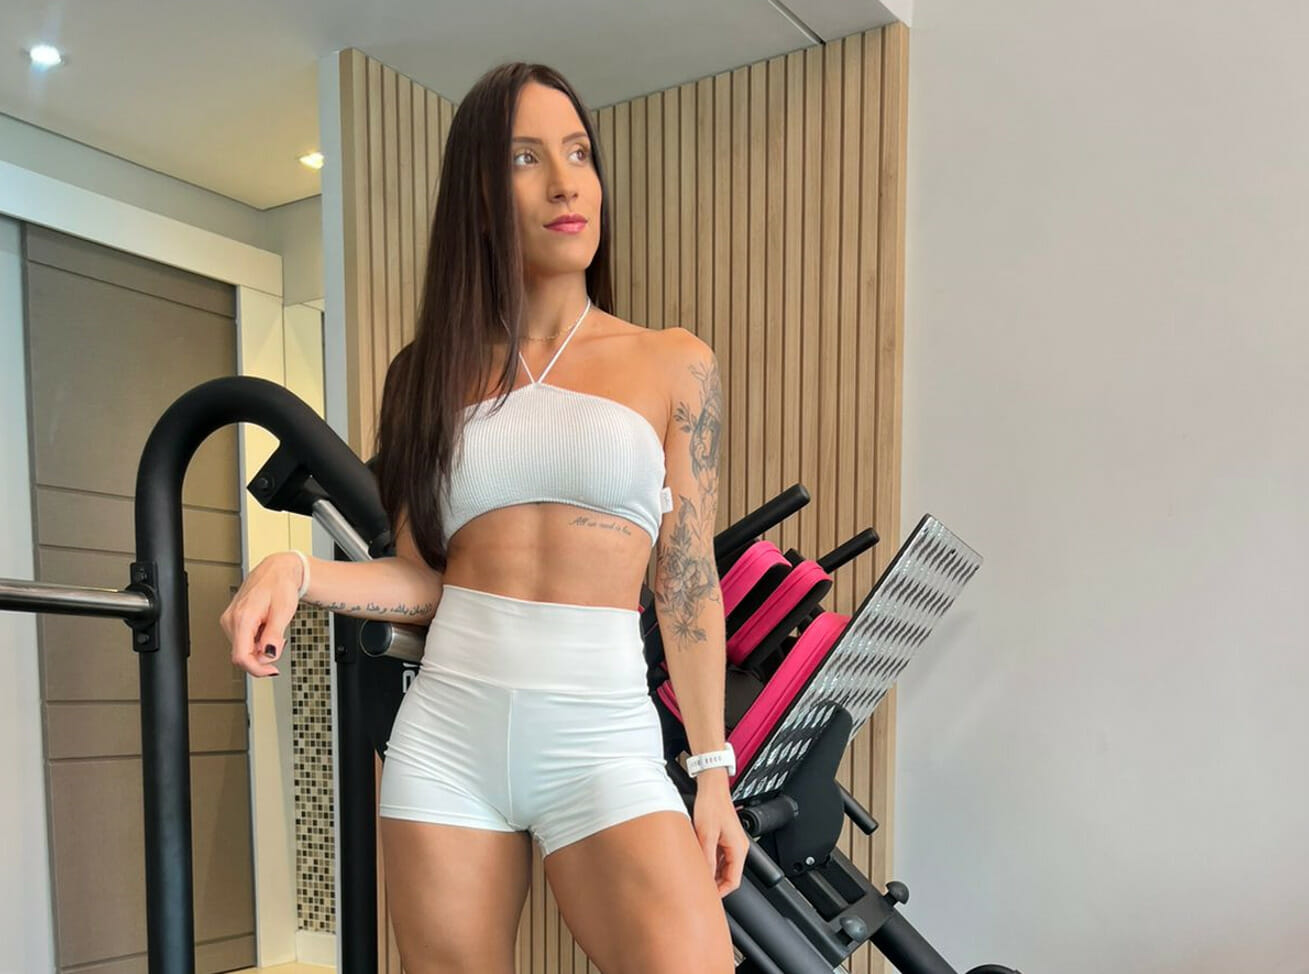 Taymila Miranda bate recordes de audiência e se torna referência no mercado  fitness feminino